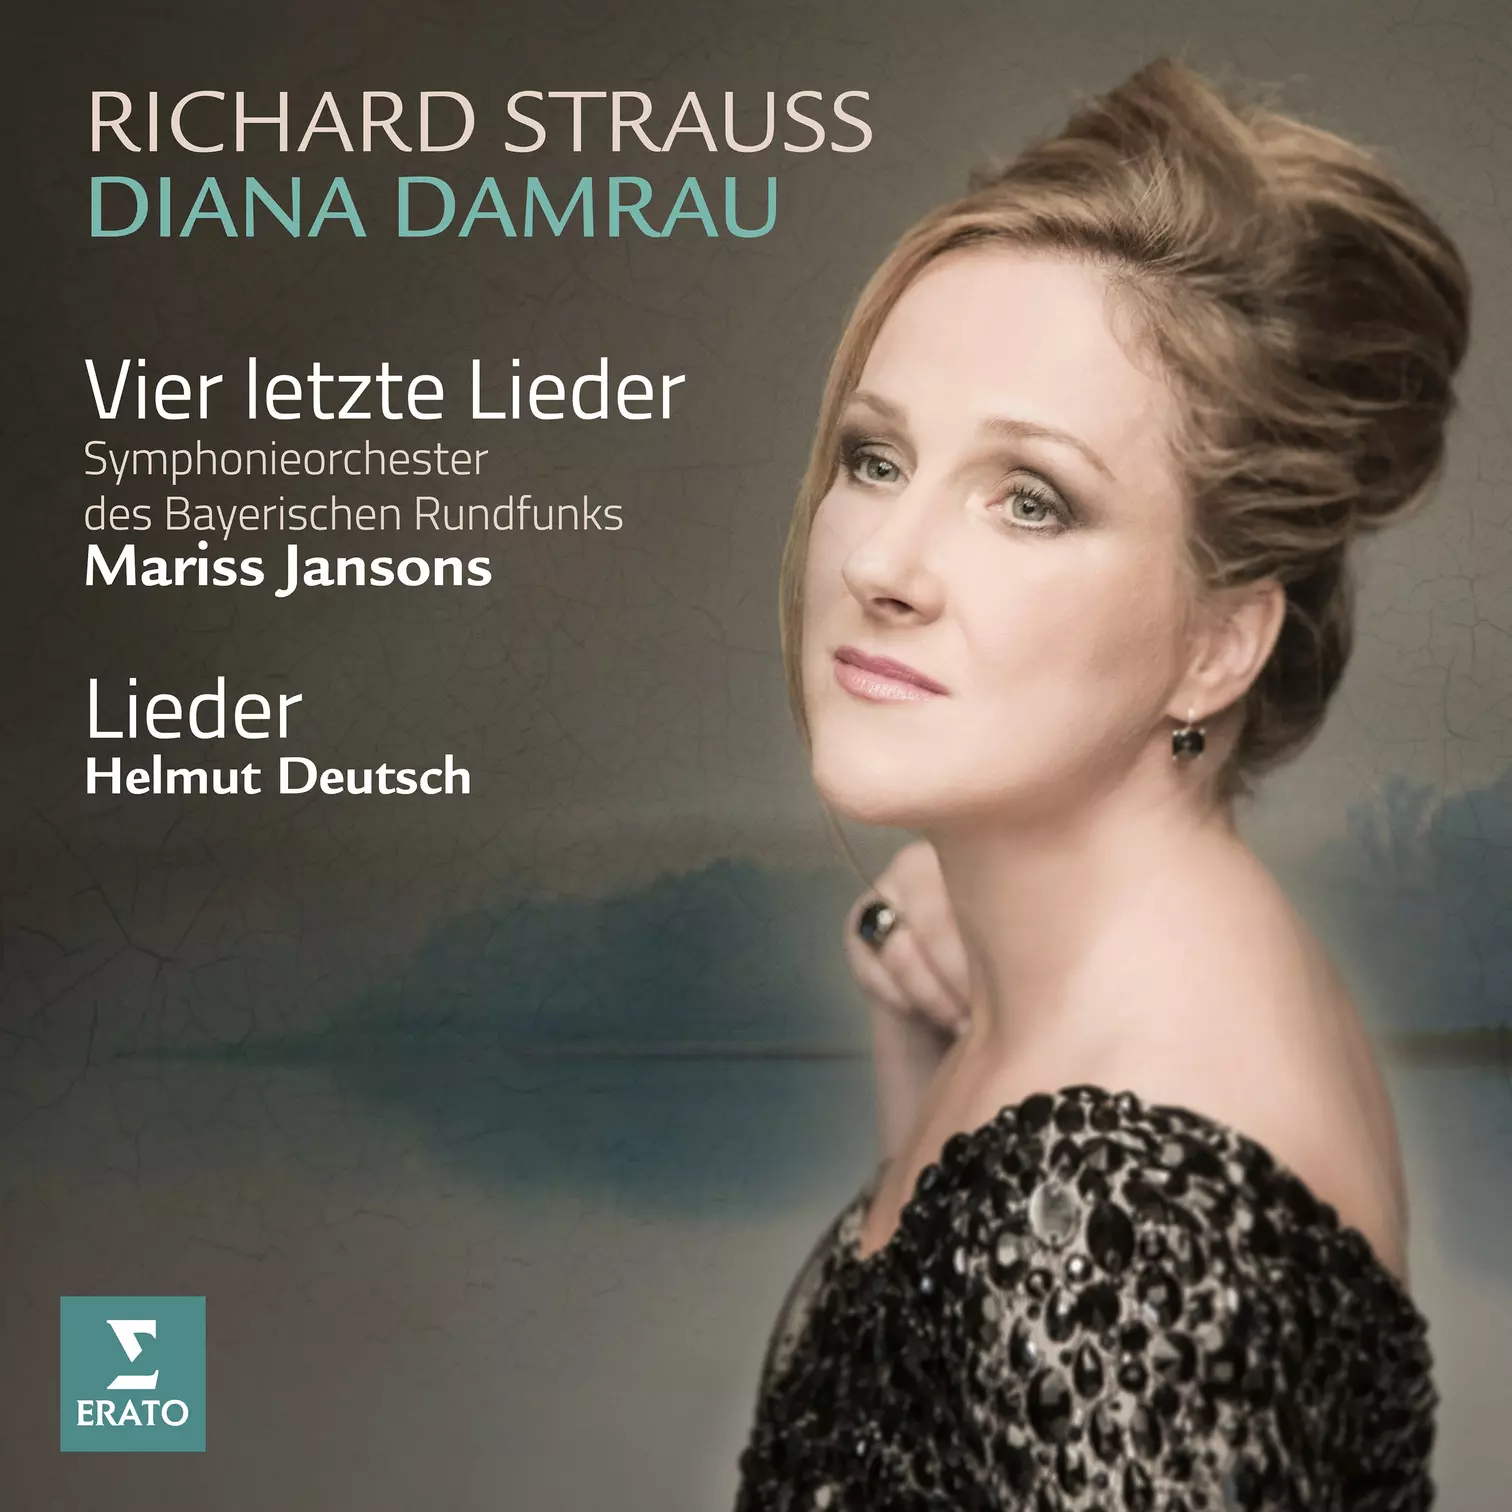 Richard Strauss: Lieder Diana Damrau